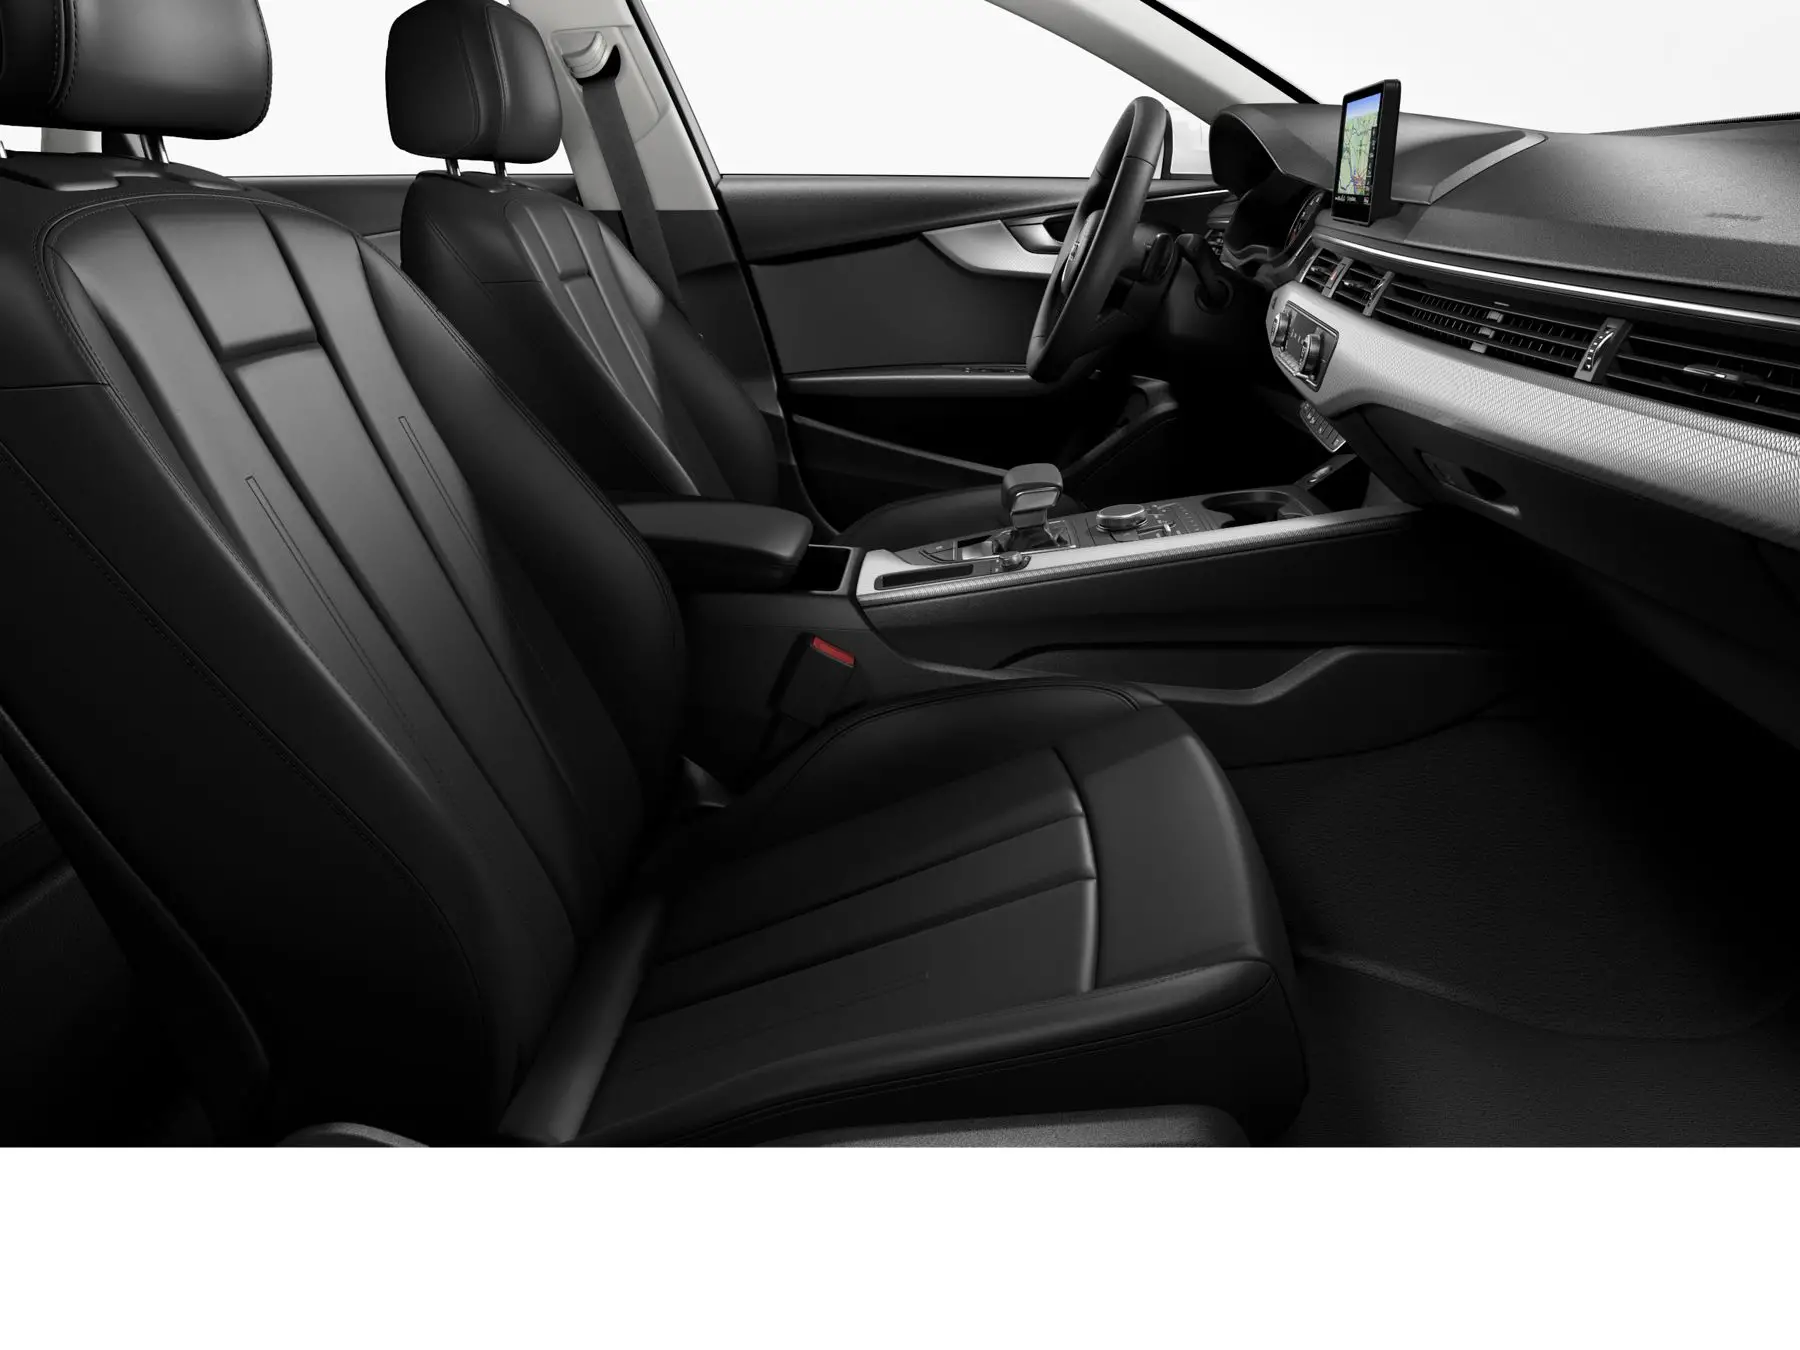 Audi A4 Premium Plus 2017 interior front seat side view